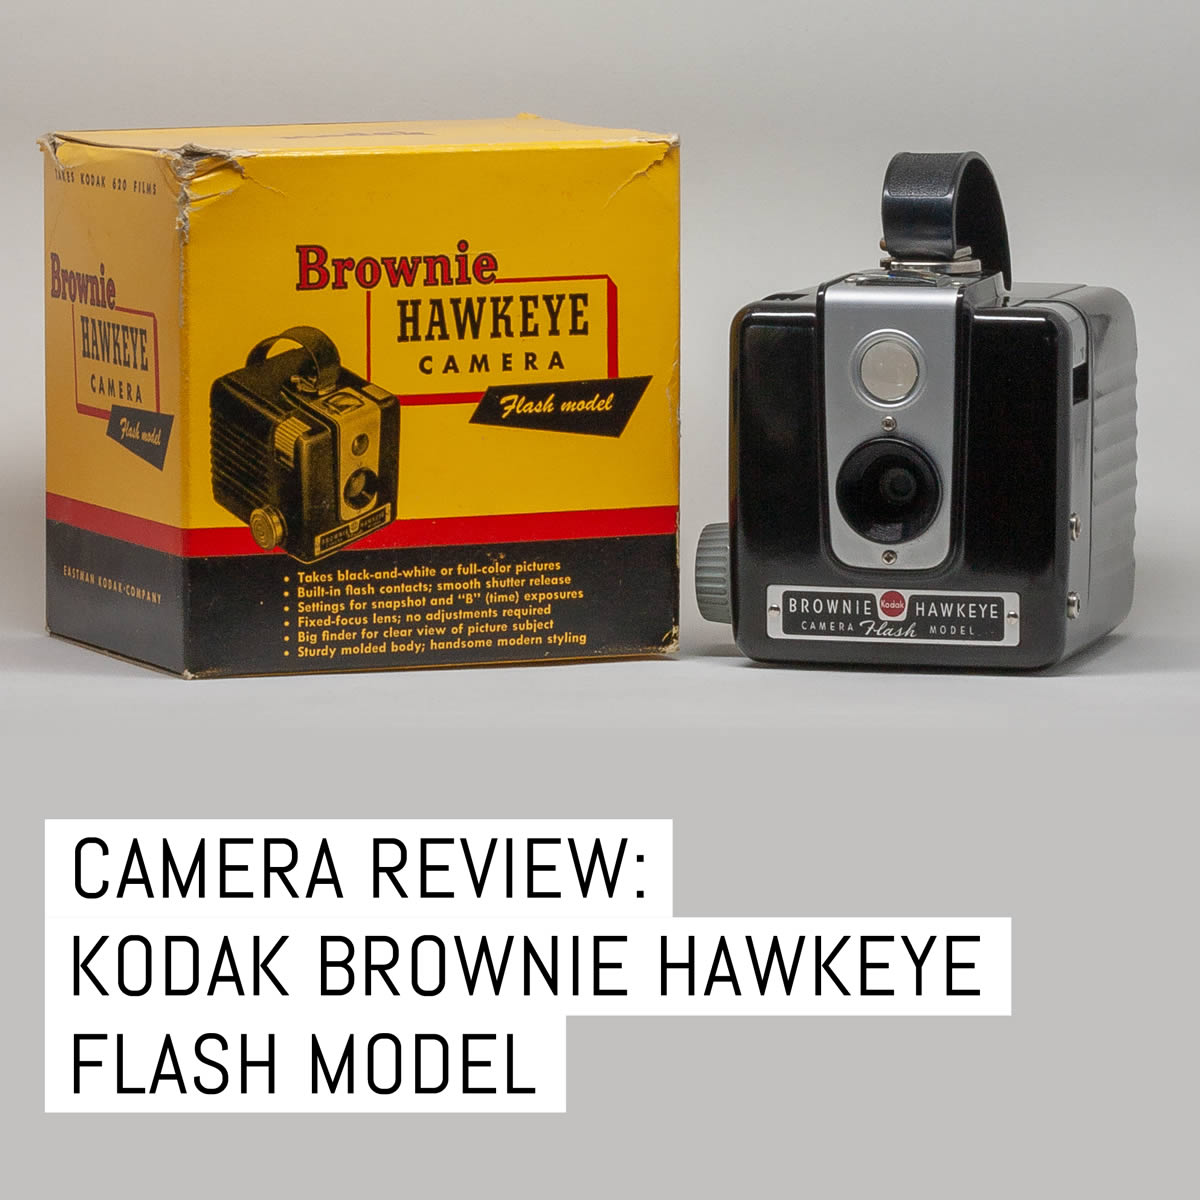 Camera Review: Kodak Brownie Hawkeye, Flash Model